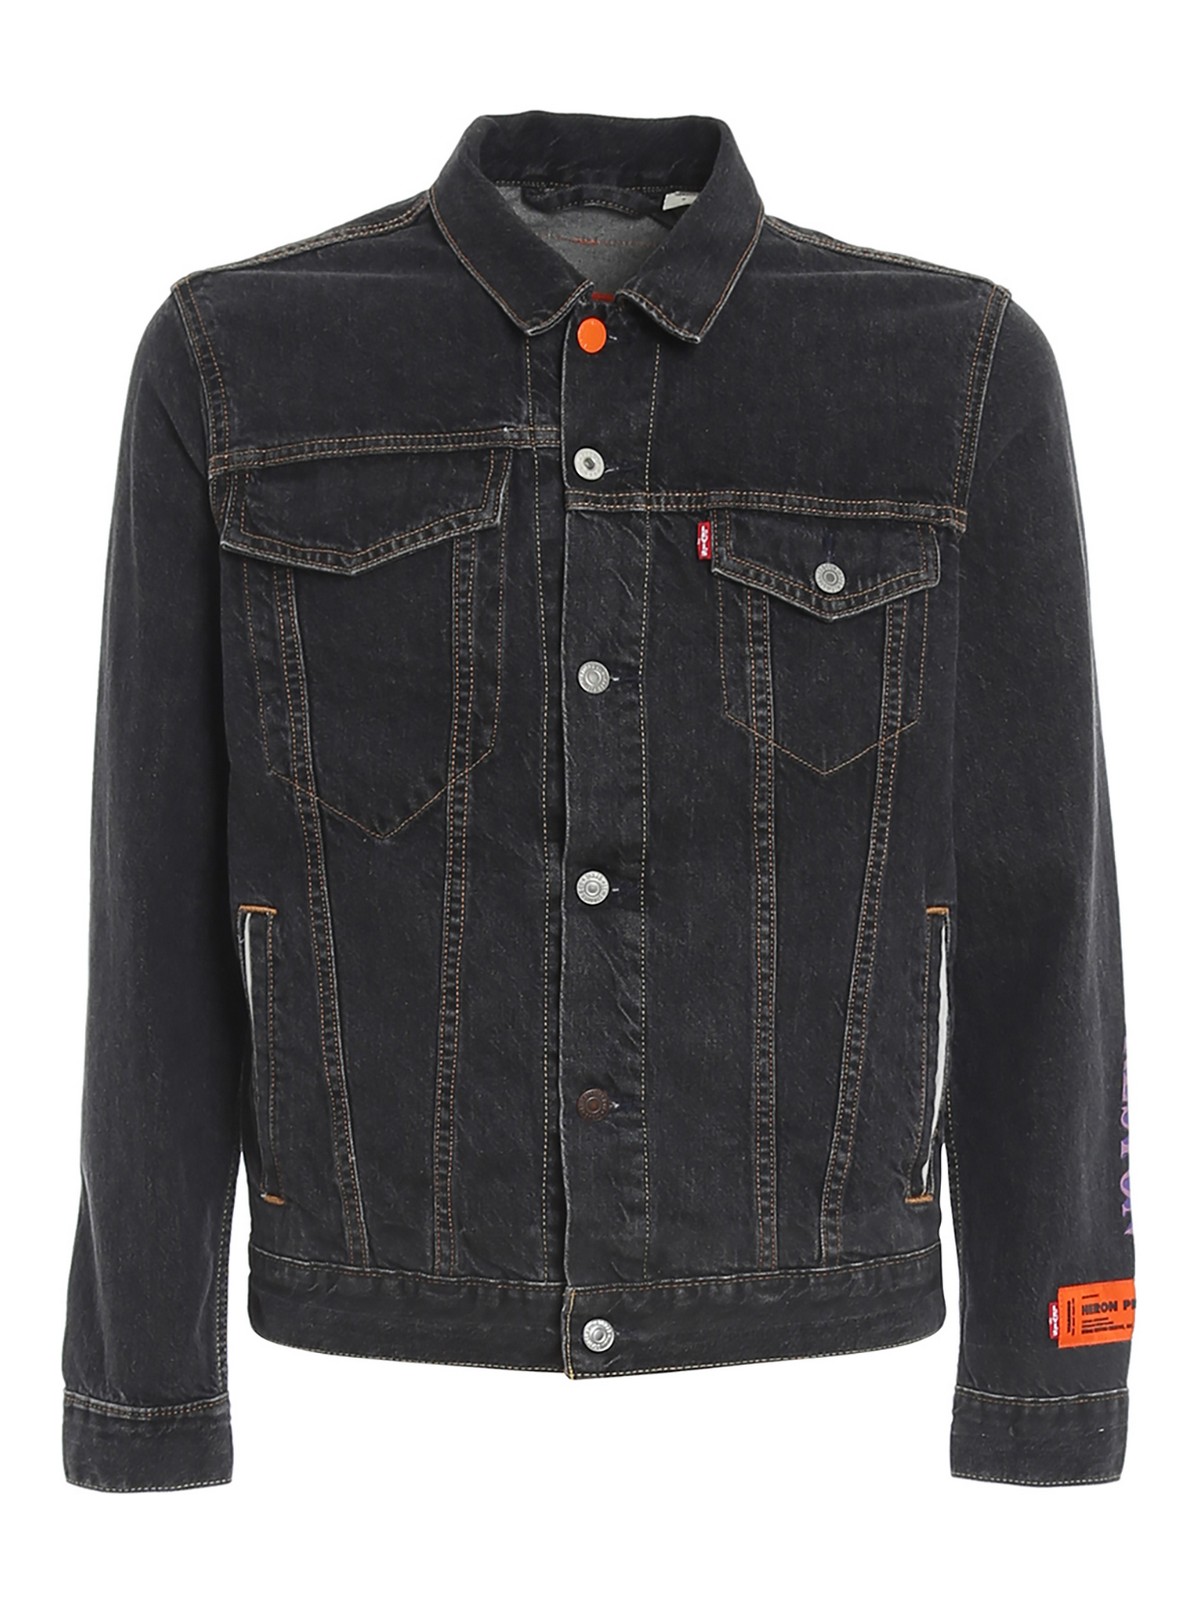 Denim jacket Heron Preston - Washed denim jacket - HMYE006S209260238988